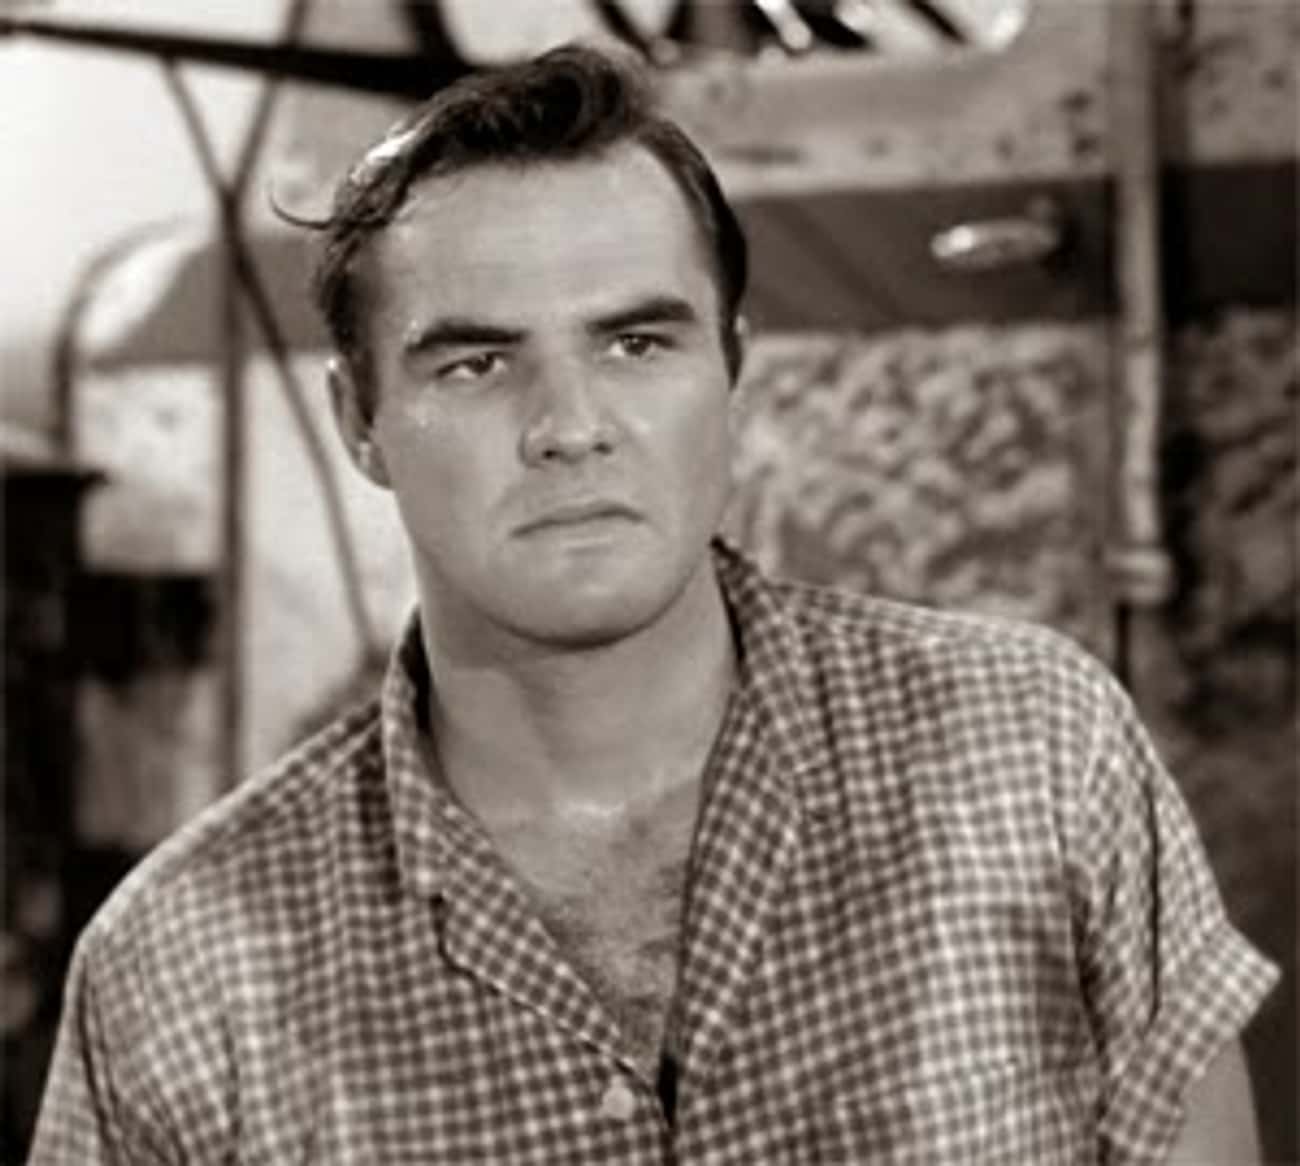 Young Burt Reynolds in a Plaid Shirt